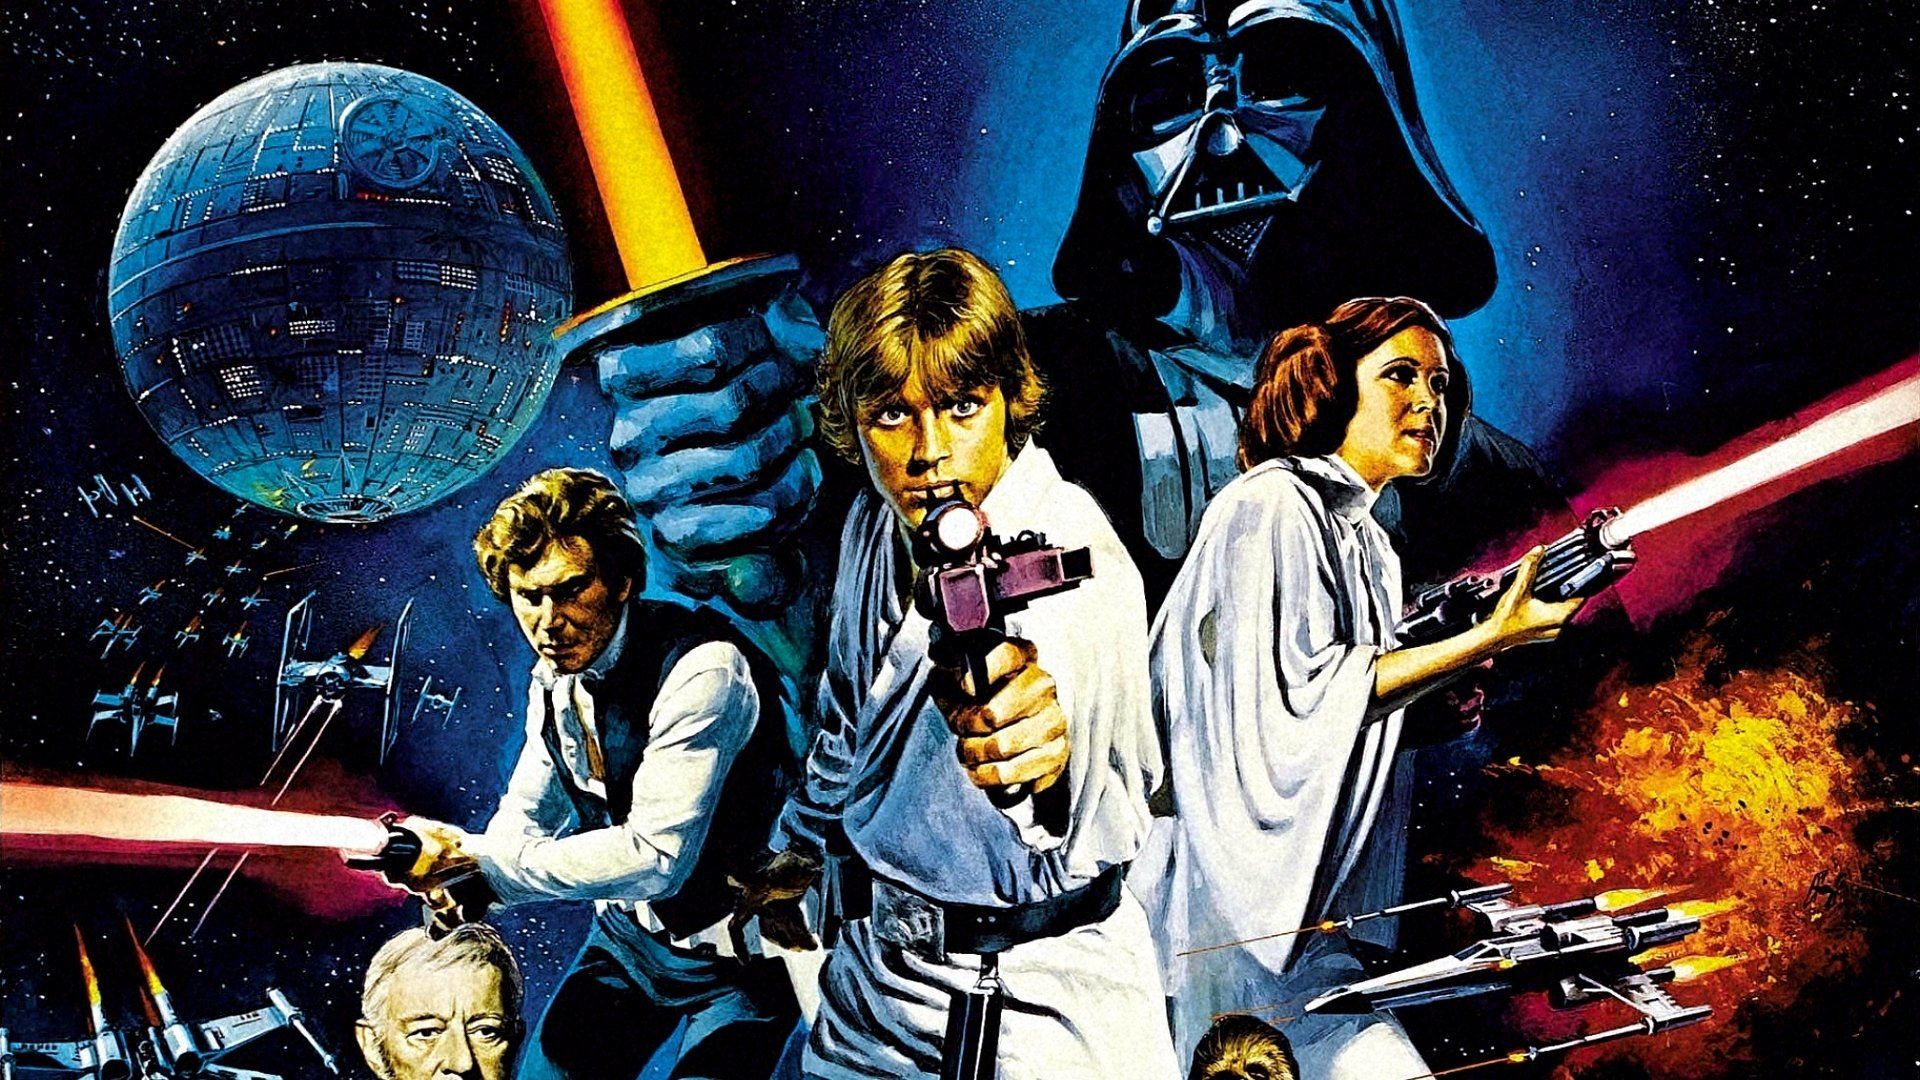 Star Wars: Episode IV - A New Hope background